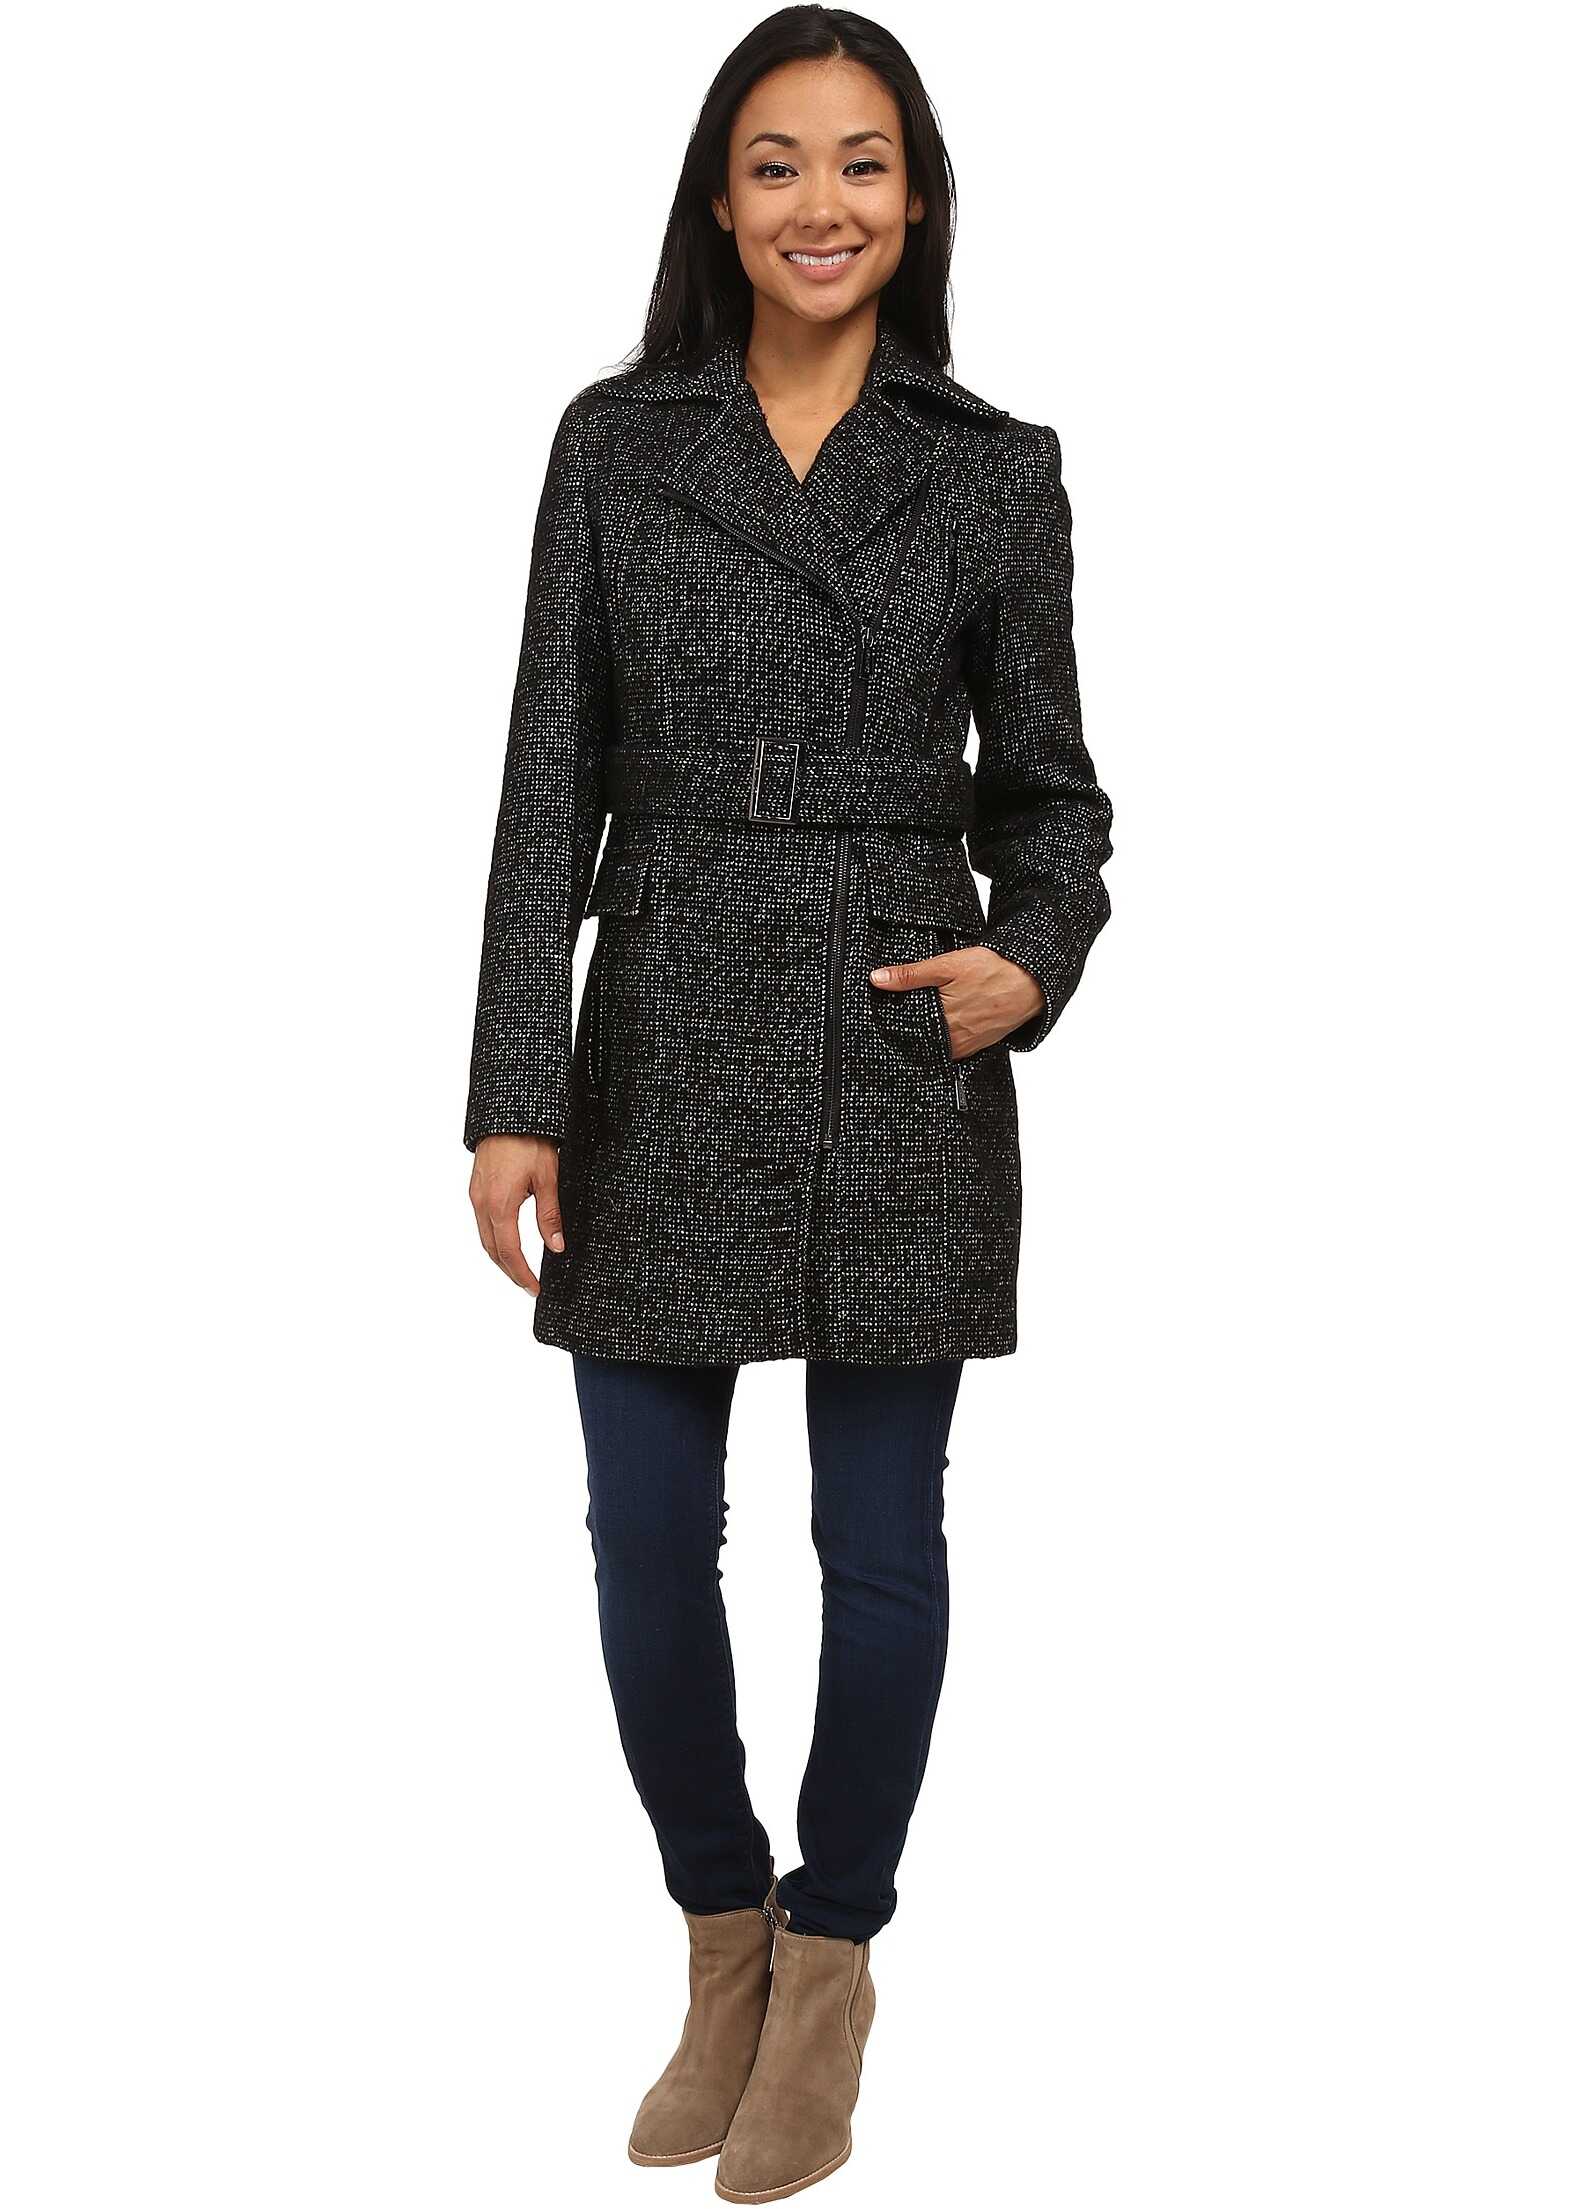 Pardesiu Calvin Klein Wool Belted Coat w/ Asymmetrical Zipper Black/White